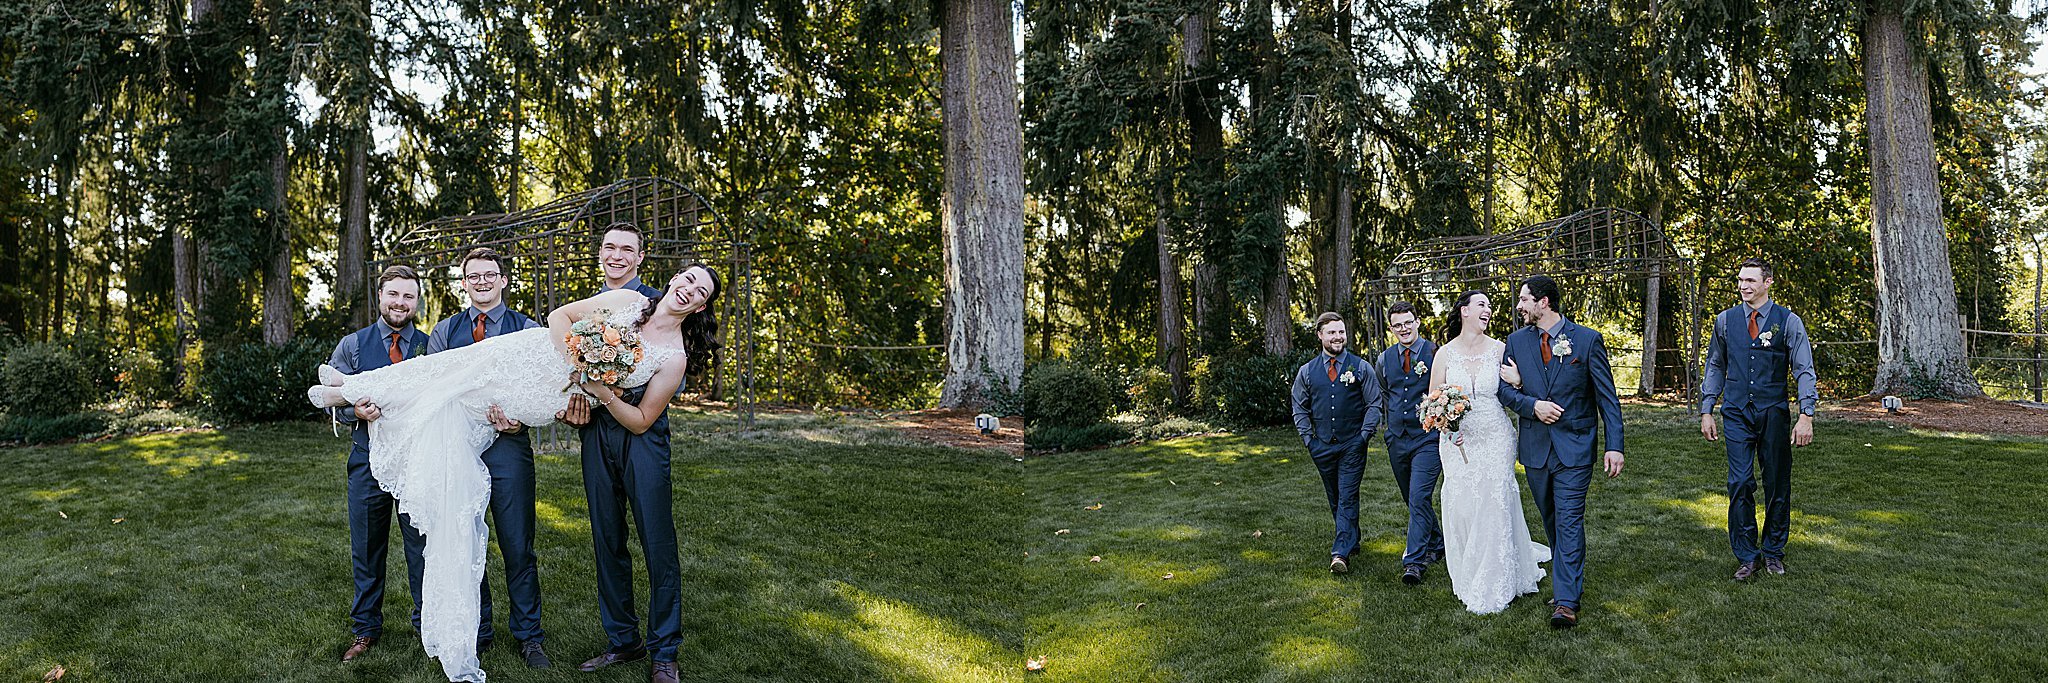 withstylePhotography_Oregon city Photographer_ Portland wedding photographer_Vanderbeck vally farms wedding_Oregon elopment Photographer0021.jpg